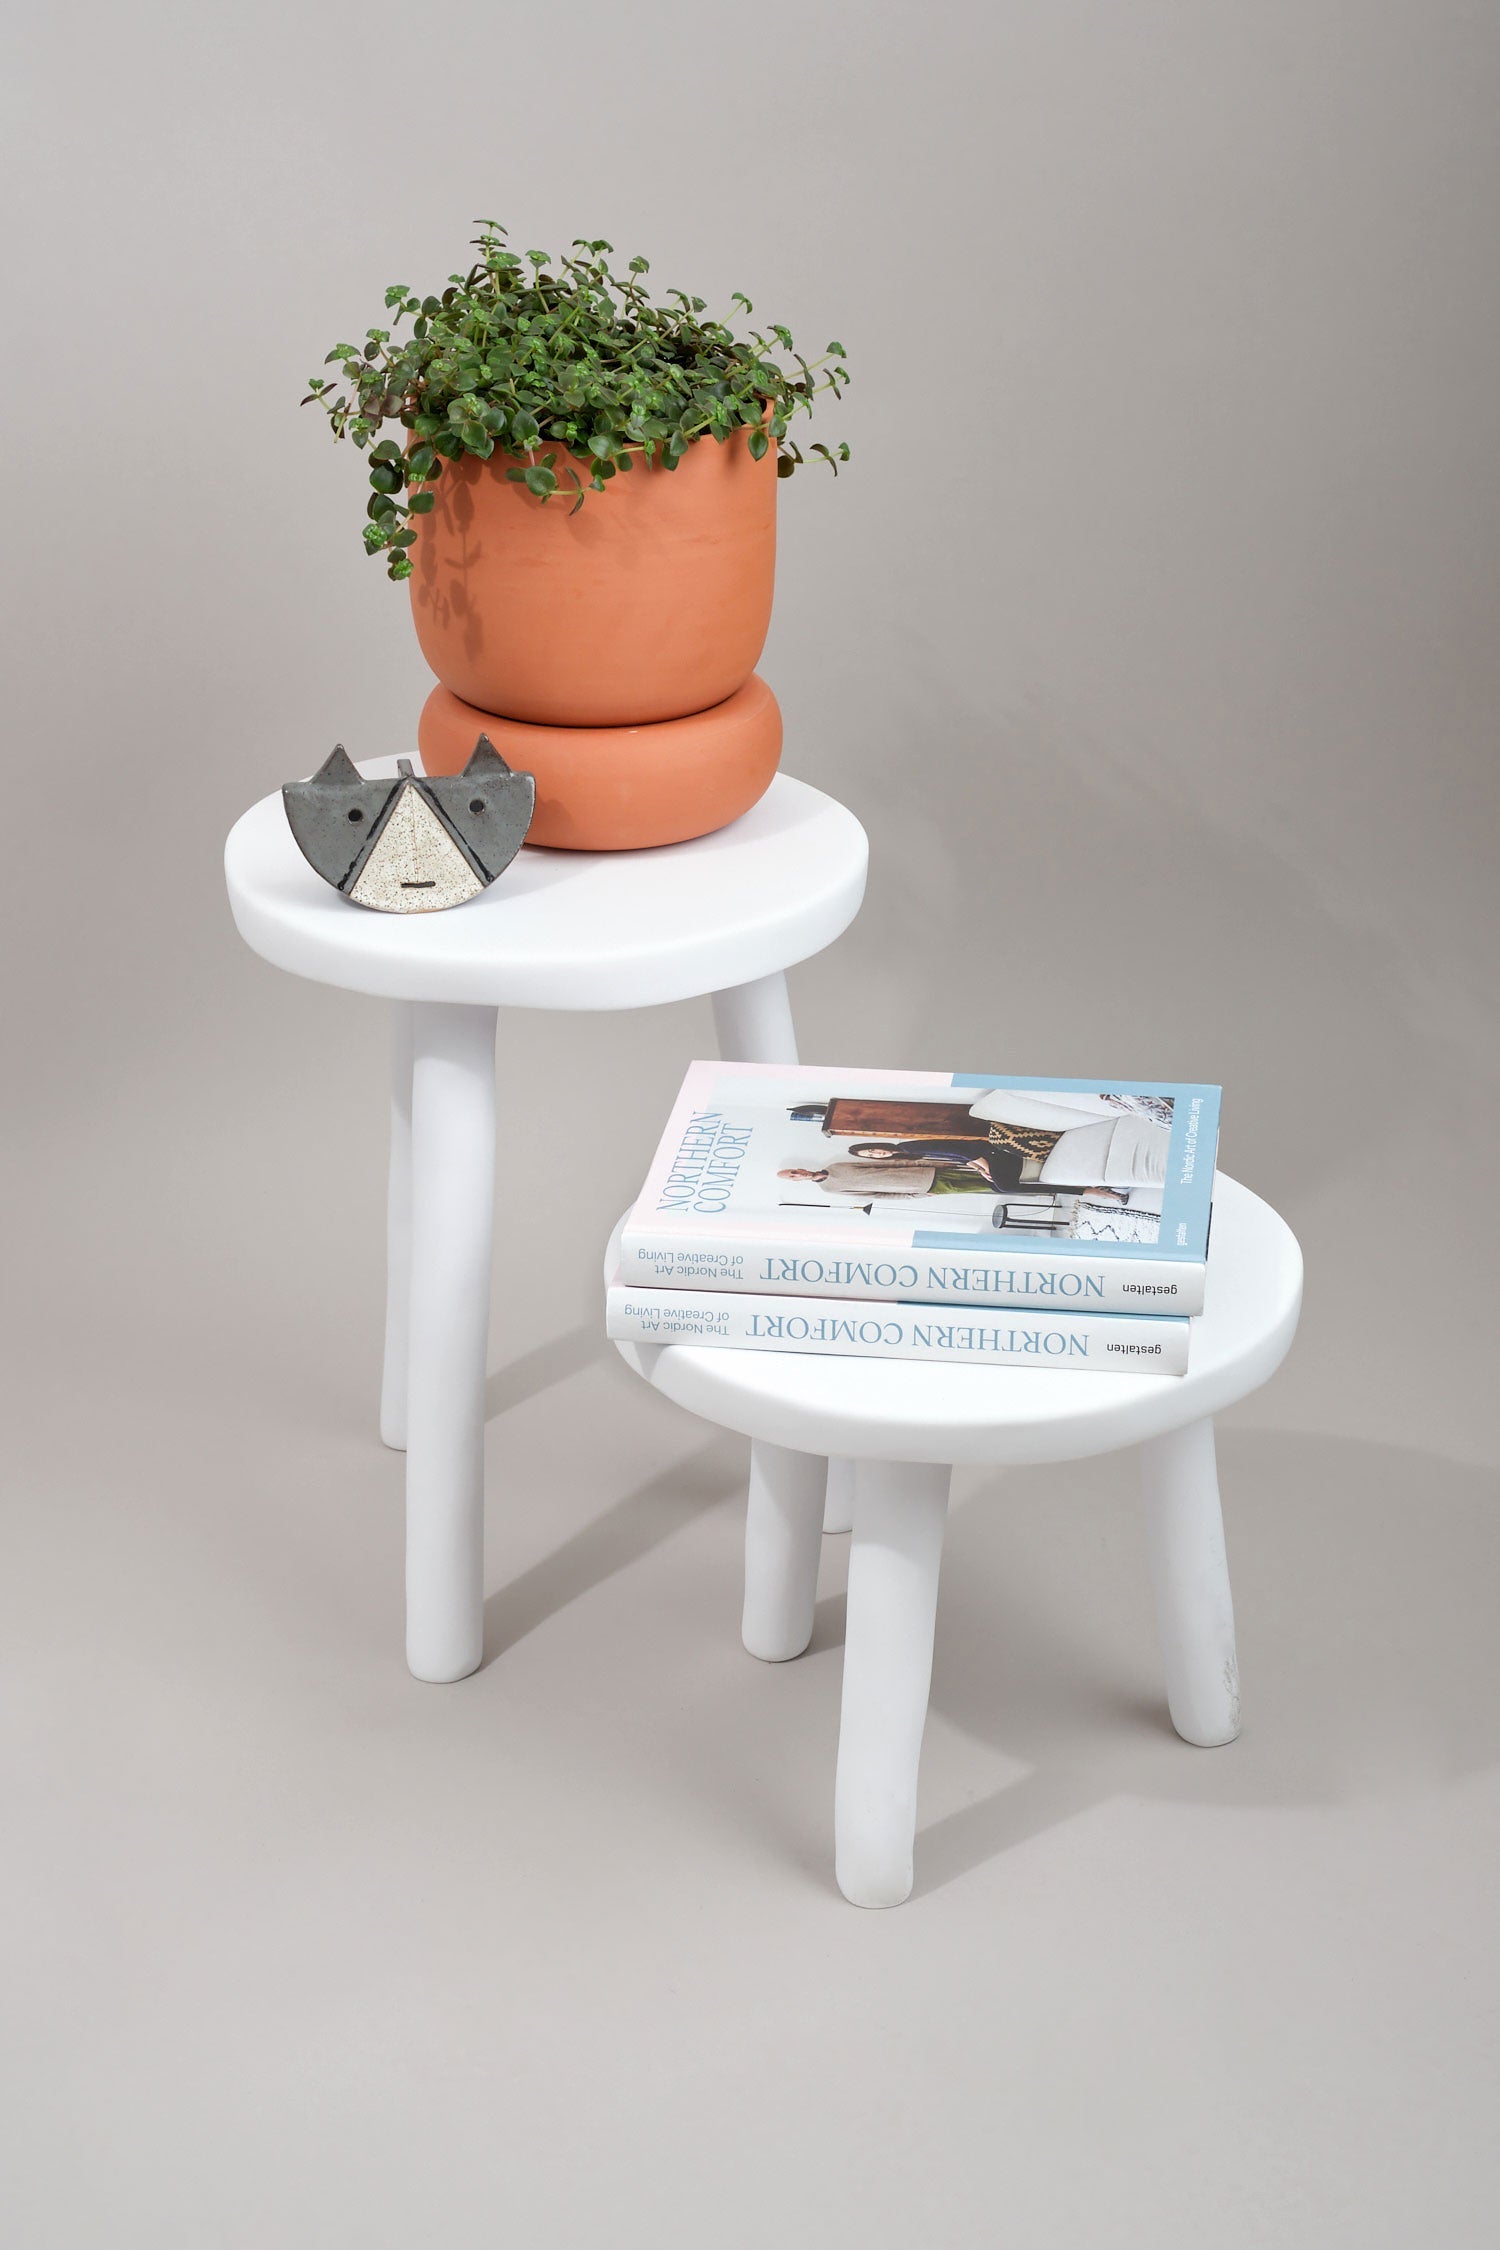 Tina Frey Designs milking stool in white